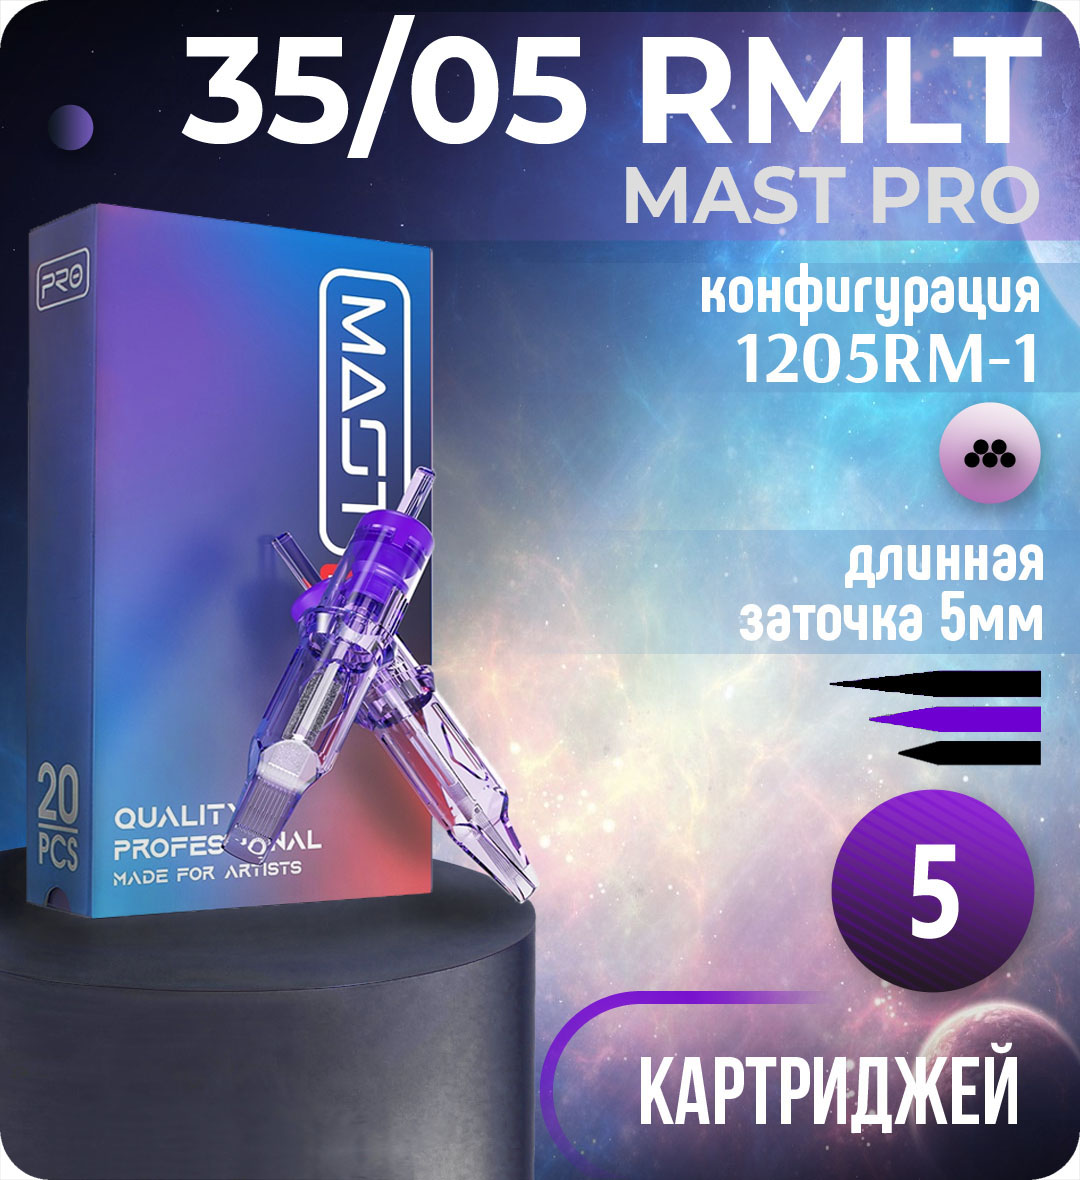 Картриджи Mast Pro 35/05 RMLT (1205RM-1) для тату, перманентного макияжа и татуажа Dragonhawk 5шт